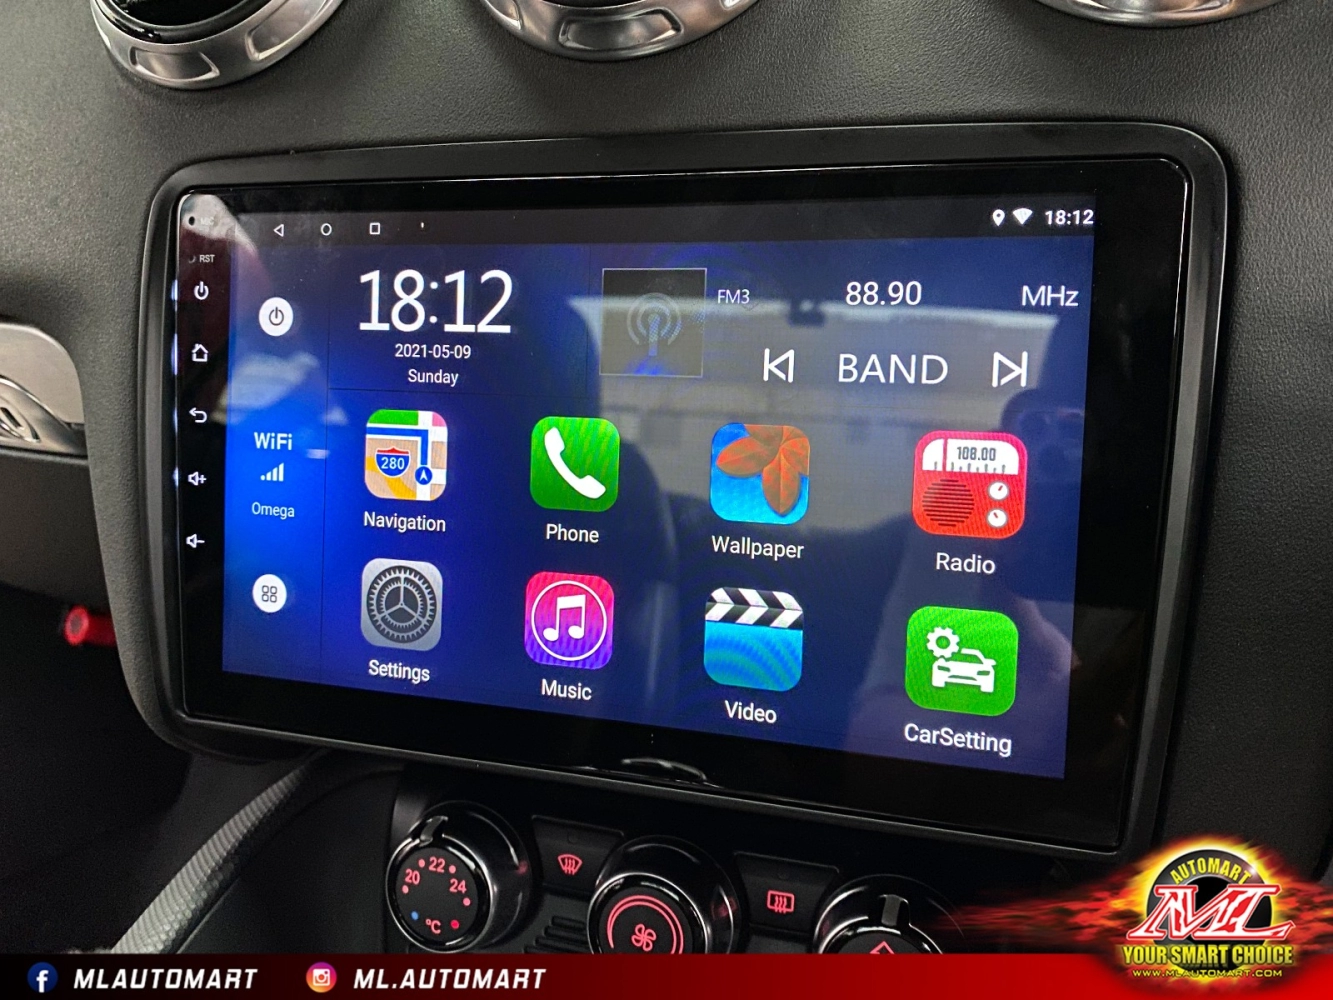 Audi TT MK2 Android Monitor